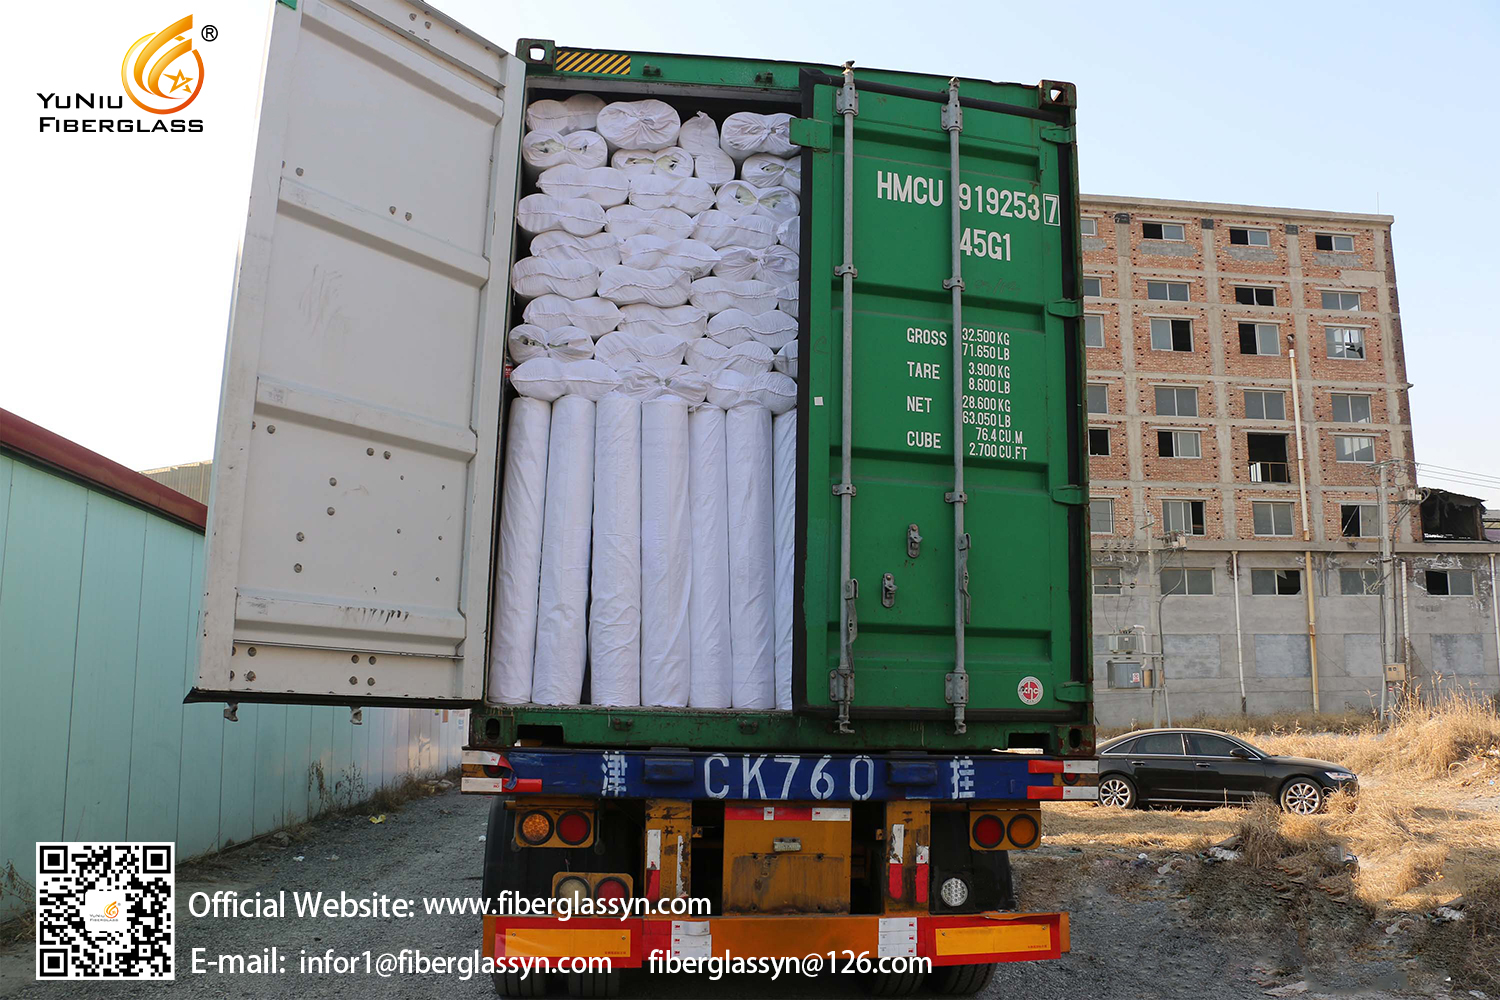 Big Unit Weight Fiberglass Mesh for Exterior Wall Reinforcement Made in China